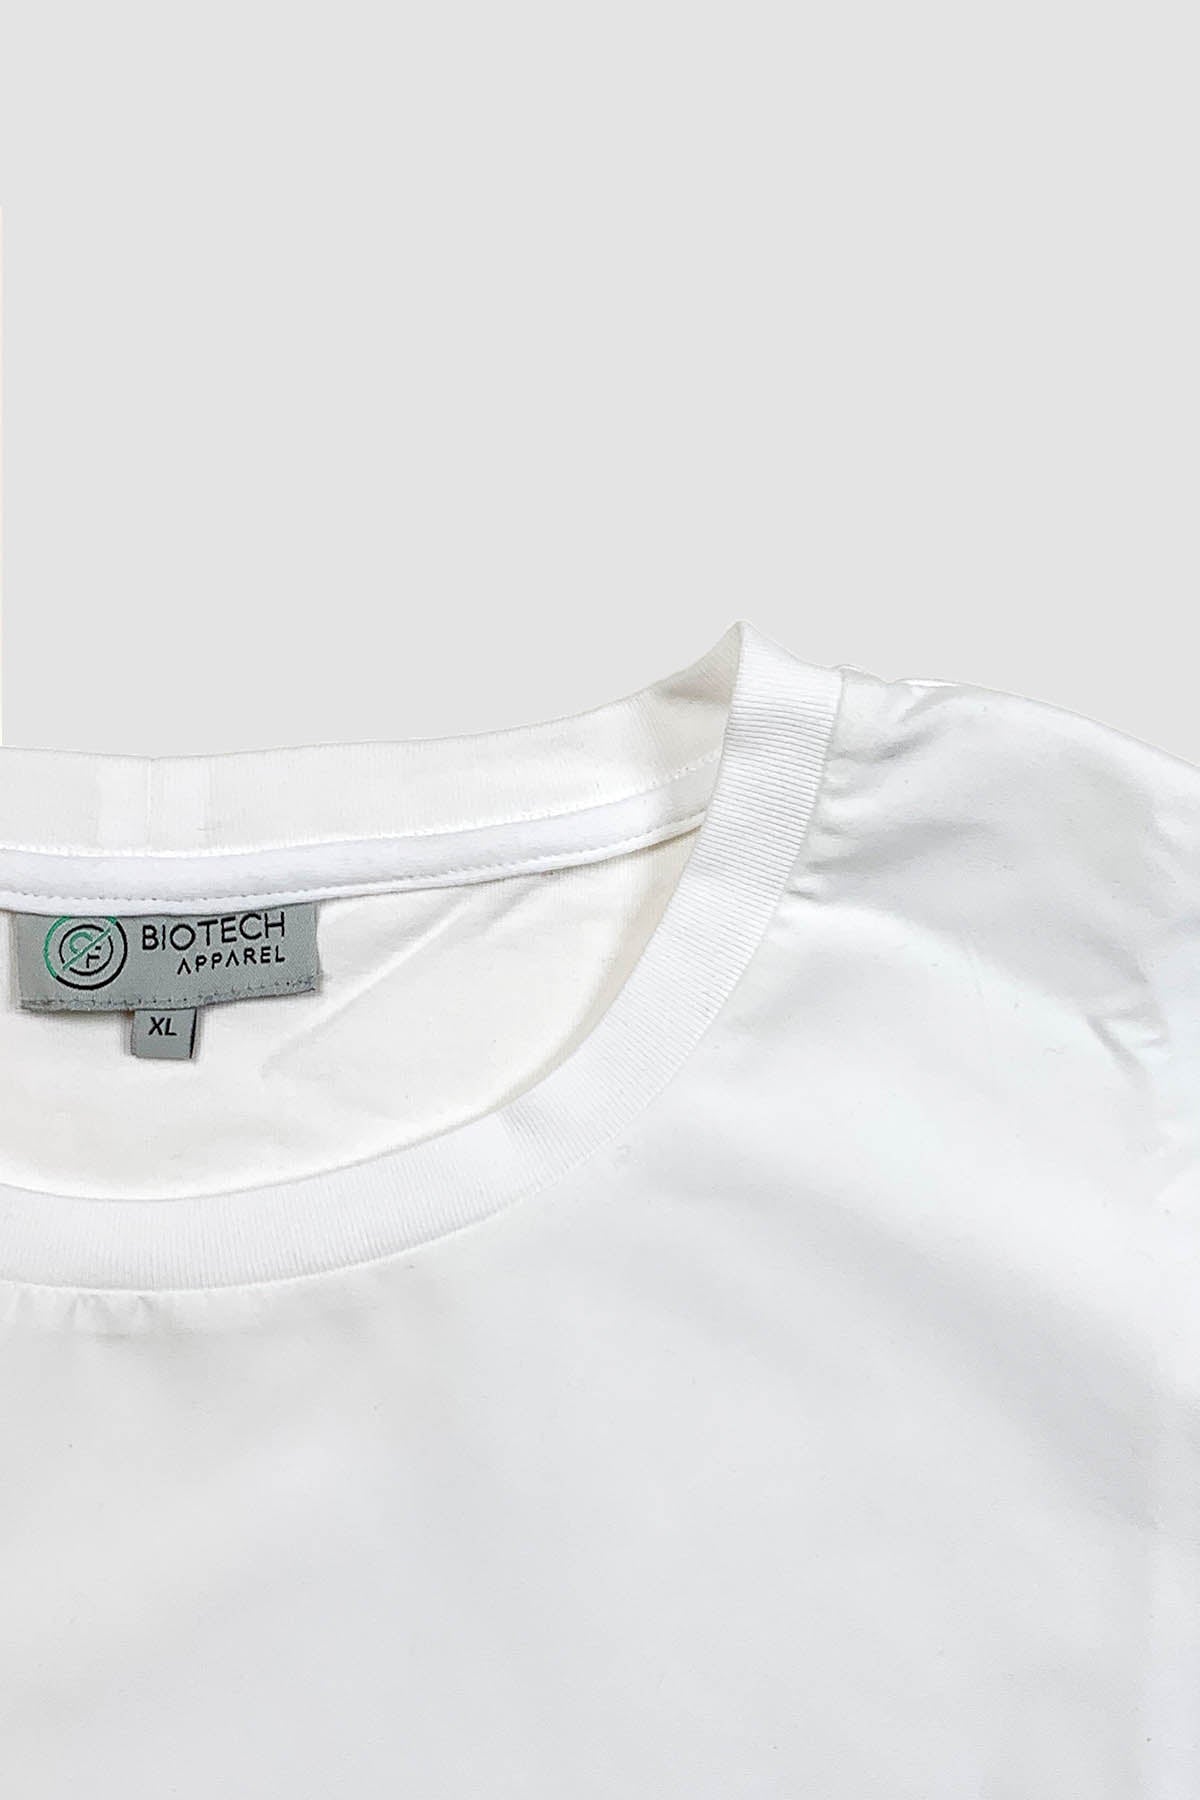 Women's  BioNTex™ Recycled Short Sleeve T-Shirt